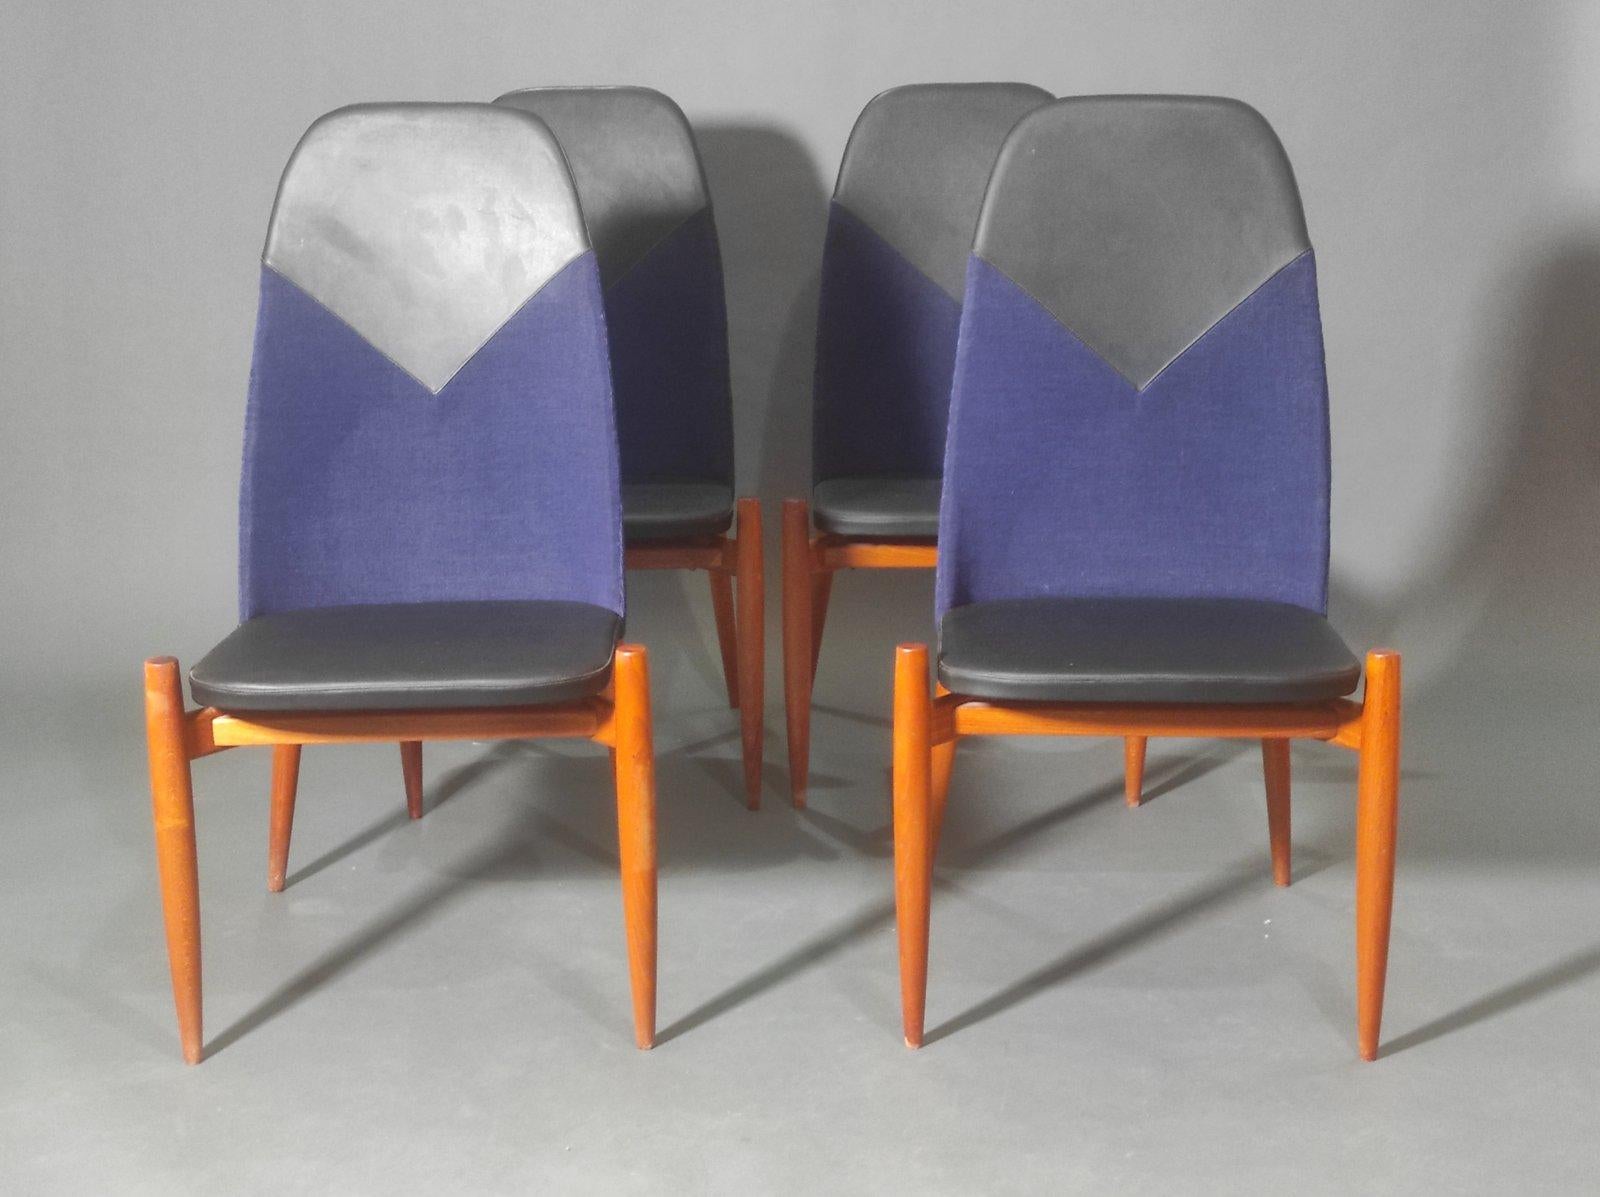 Czech Set of Four Dining Chair By Miroslav Navratil 1960s For Sale